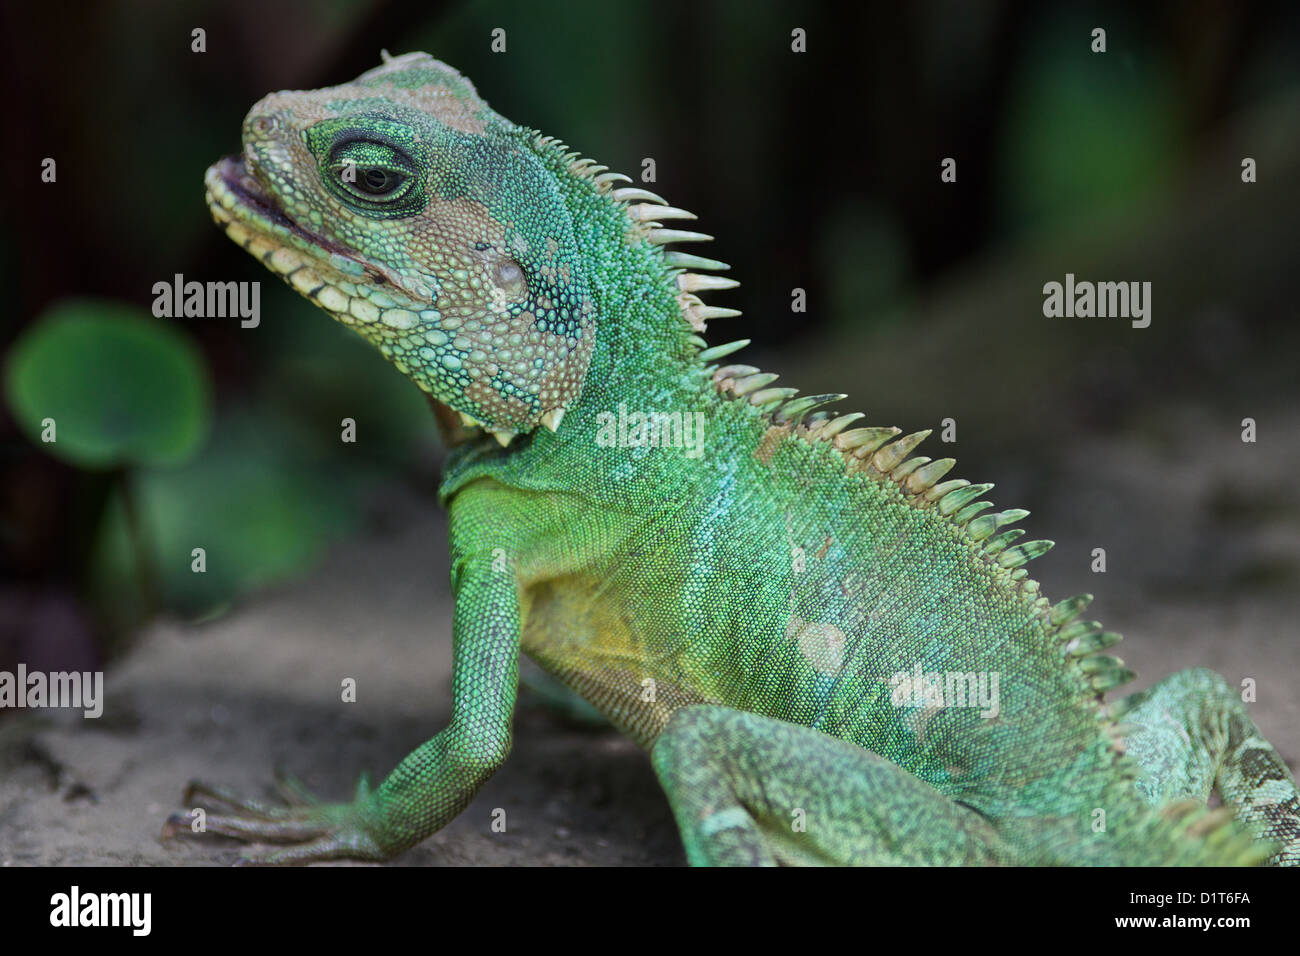 La iguana verde o Iguana común Foto de stock